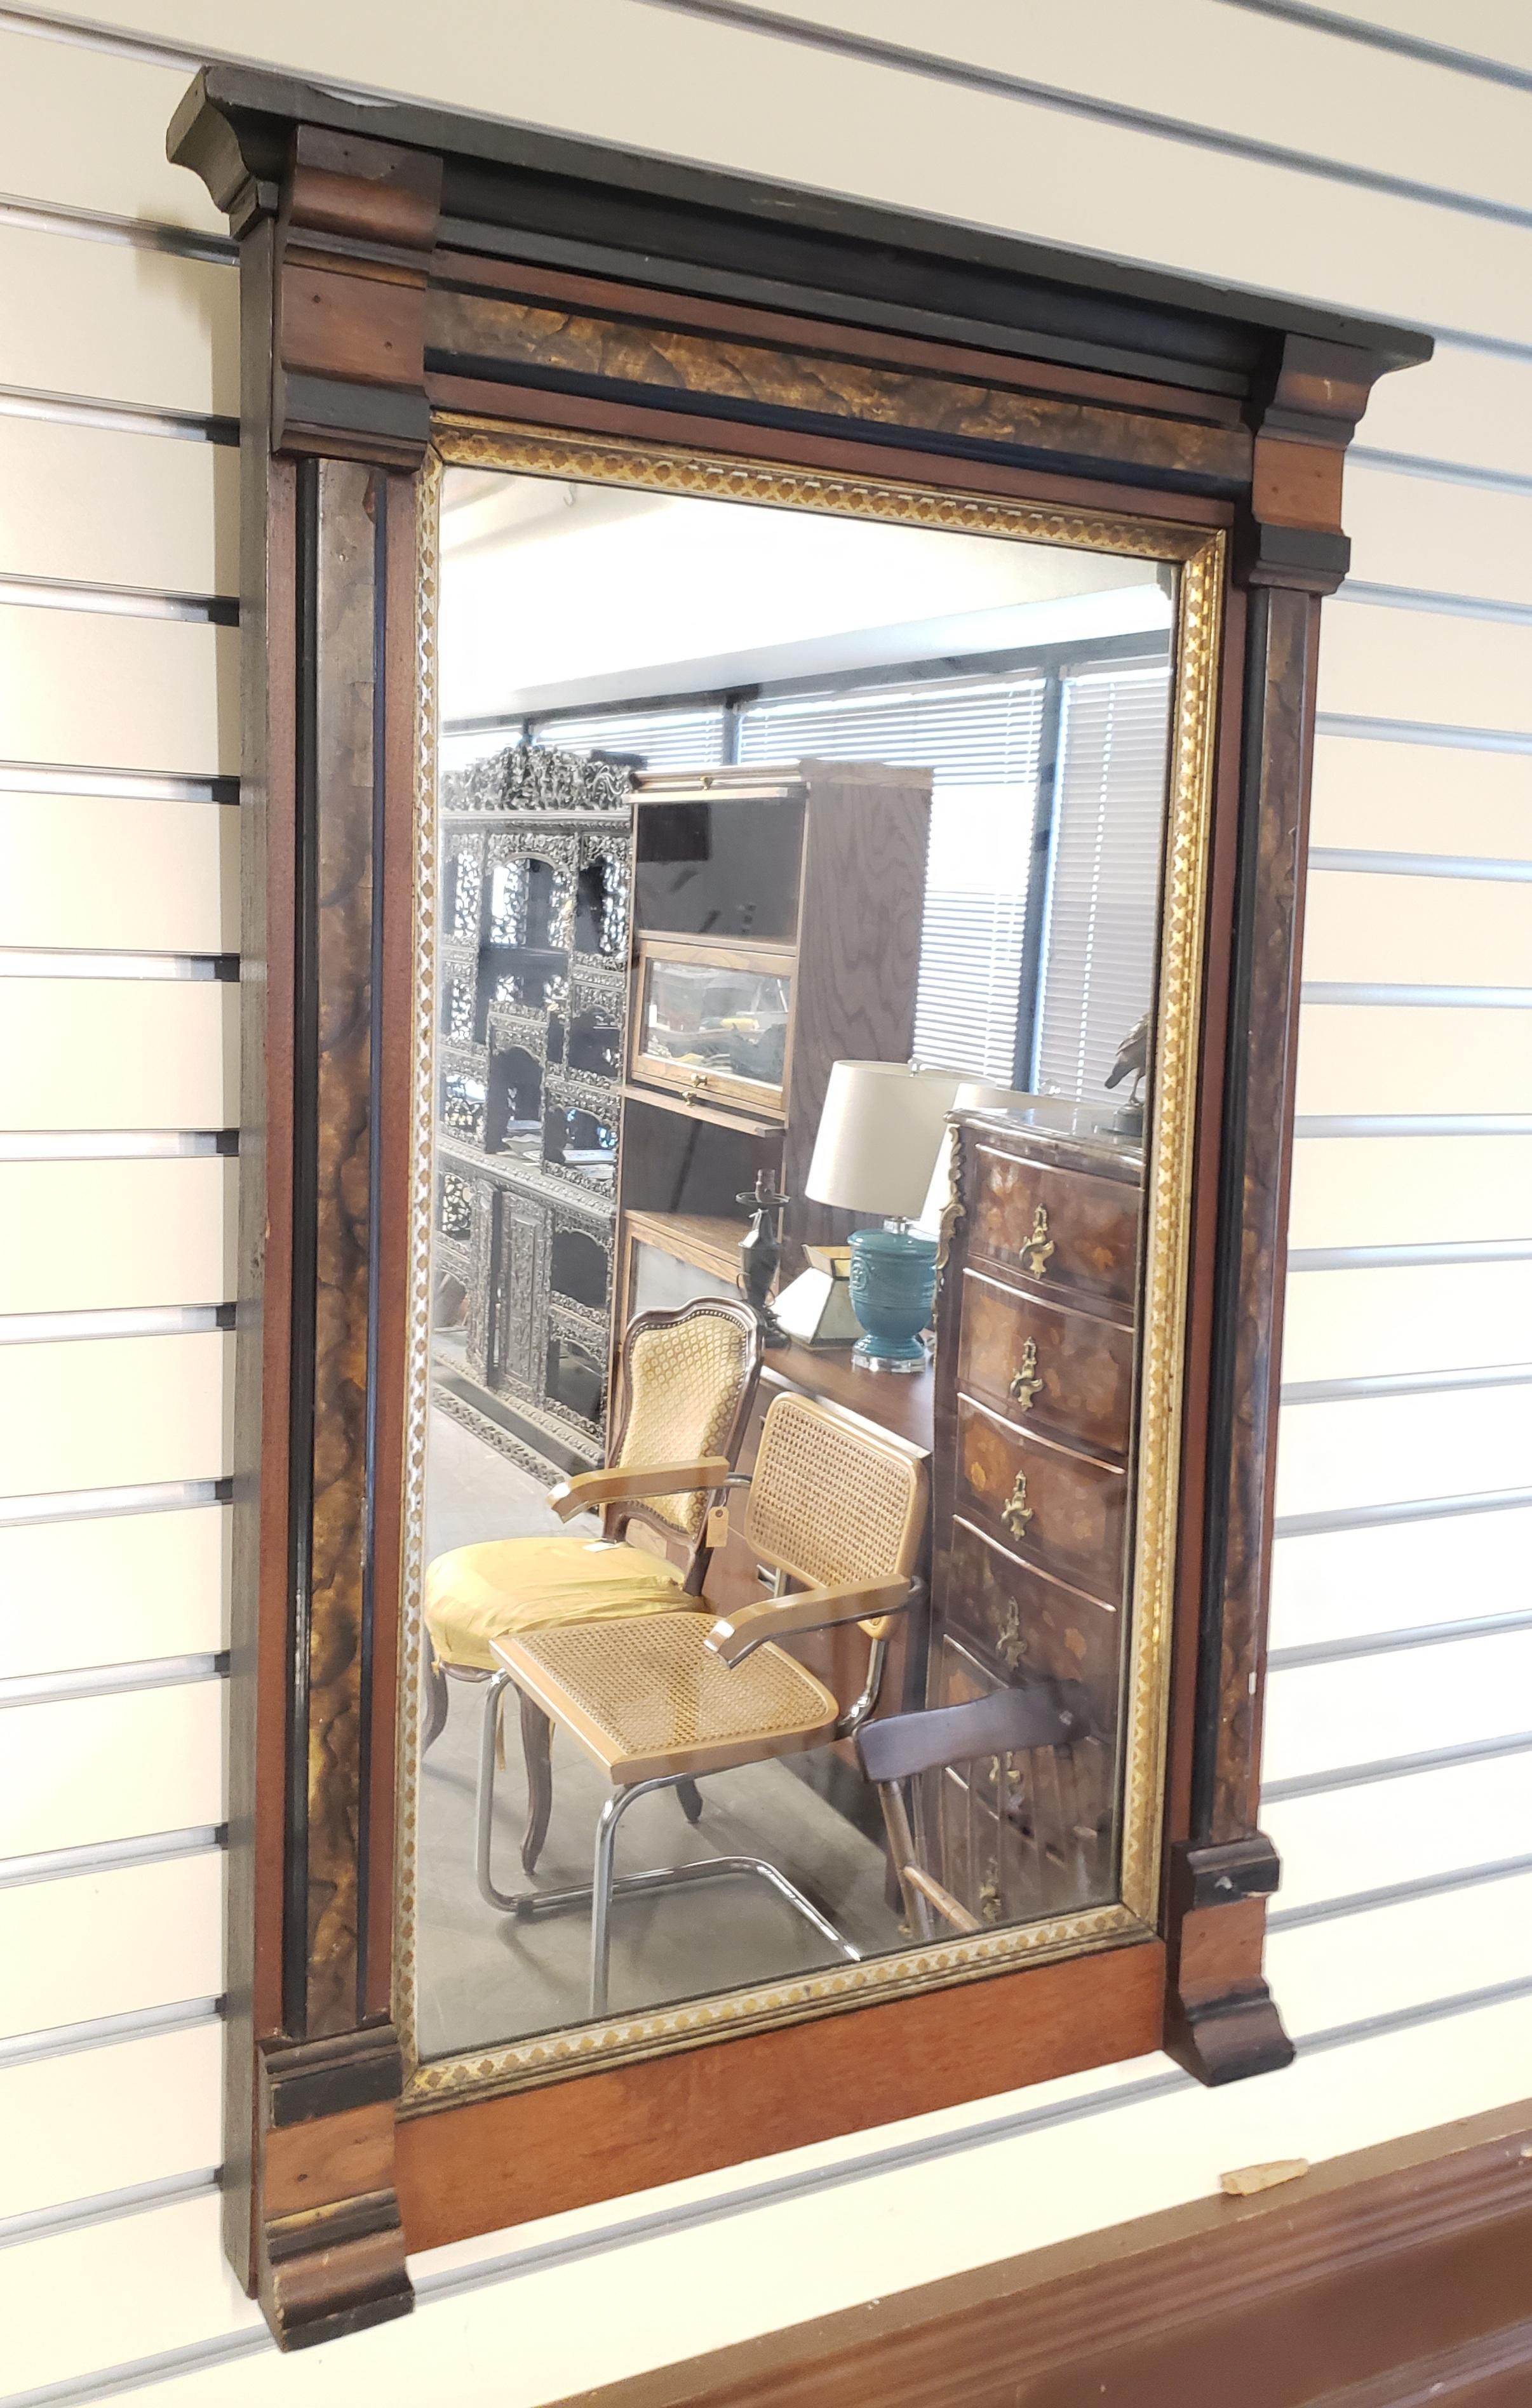 1890s American classical parcel ebonized mahogany wall mirror.
Measures 35